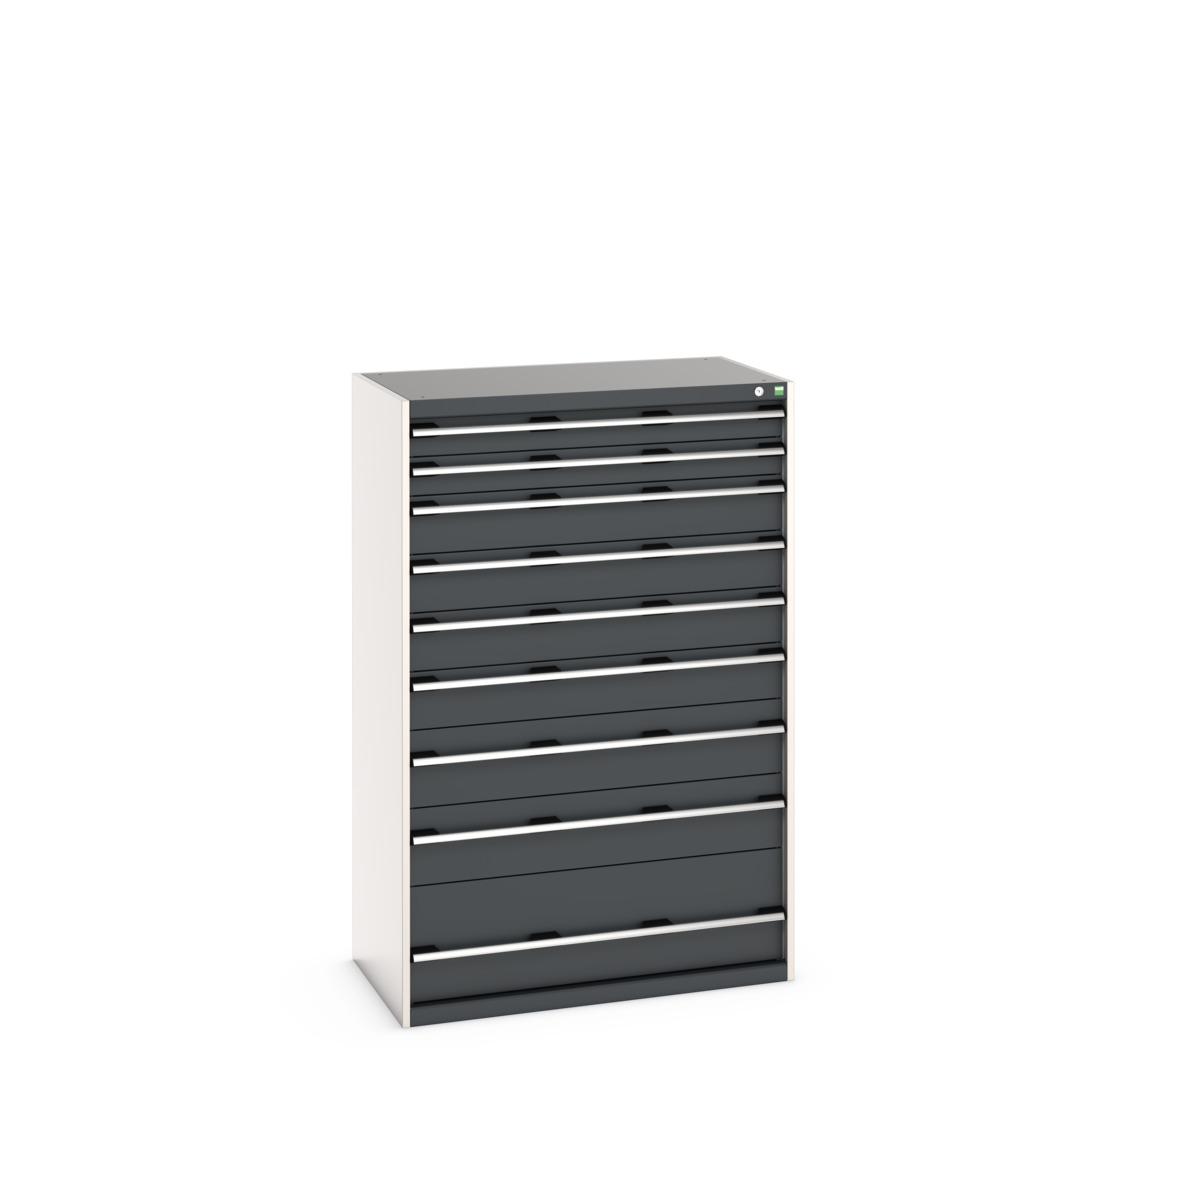 40021043. - cubio drawer cabinet